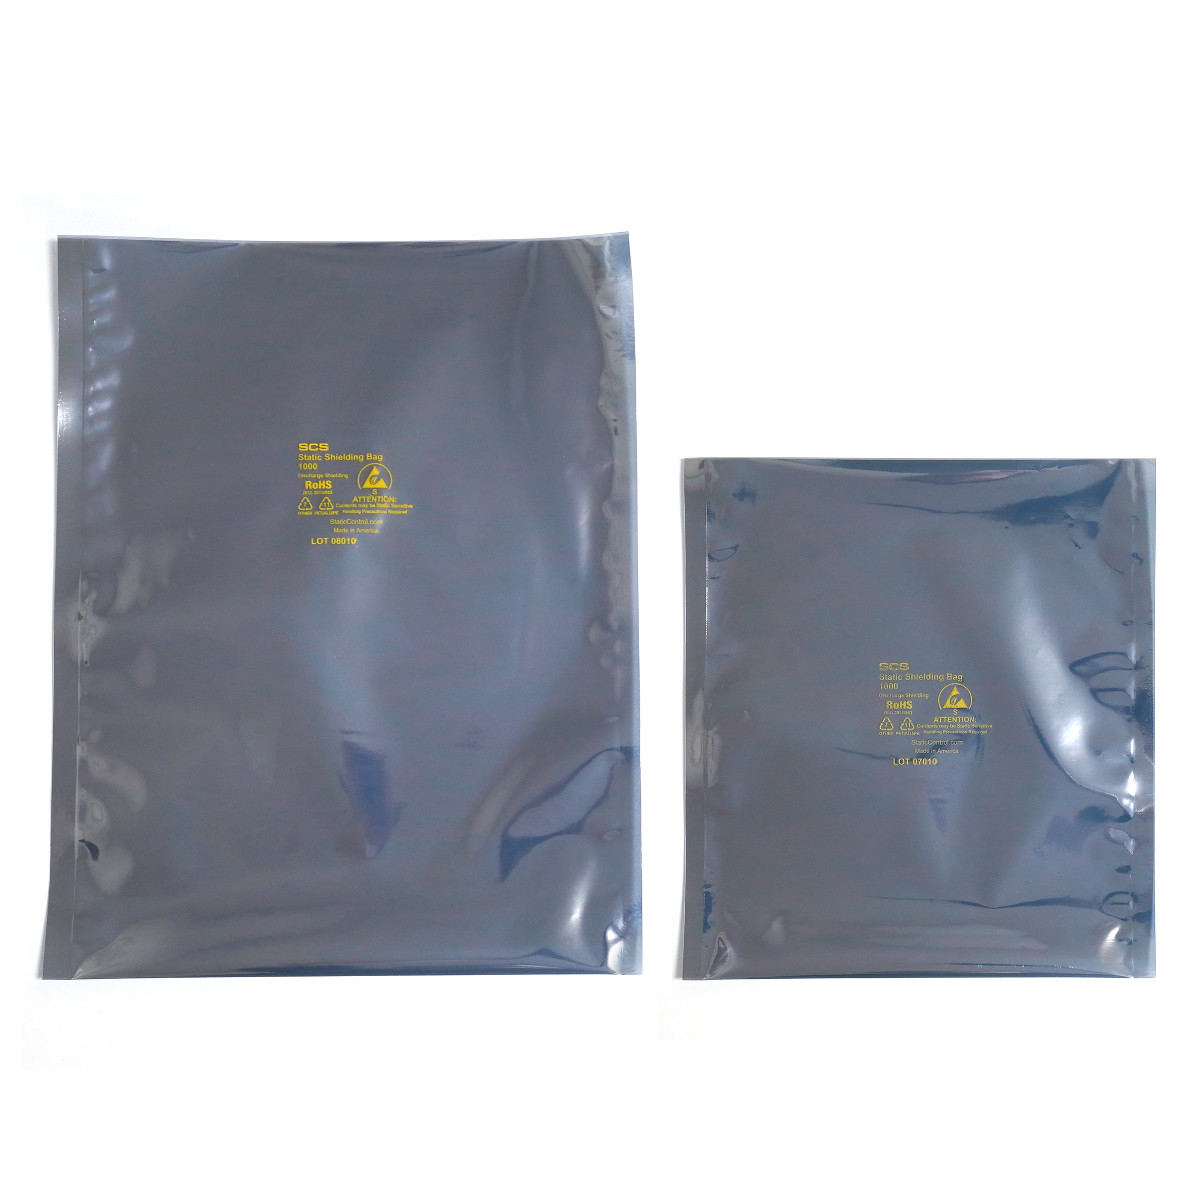 【SCS】 静電気防止袋(3層ラミネートタイプ) 【SSB】 / 【SCS】 Antistatic Bag (3 layer